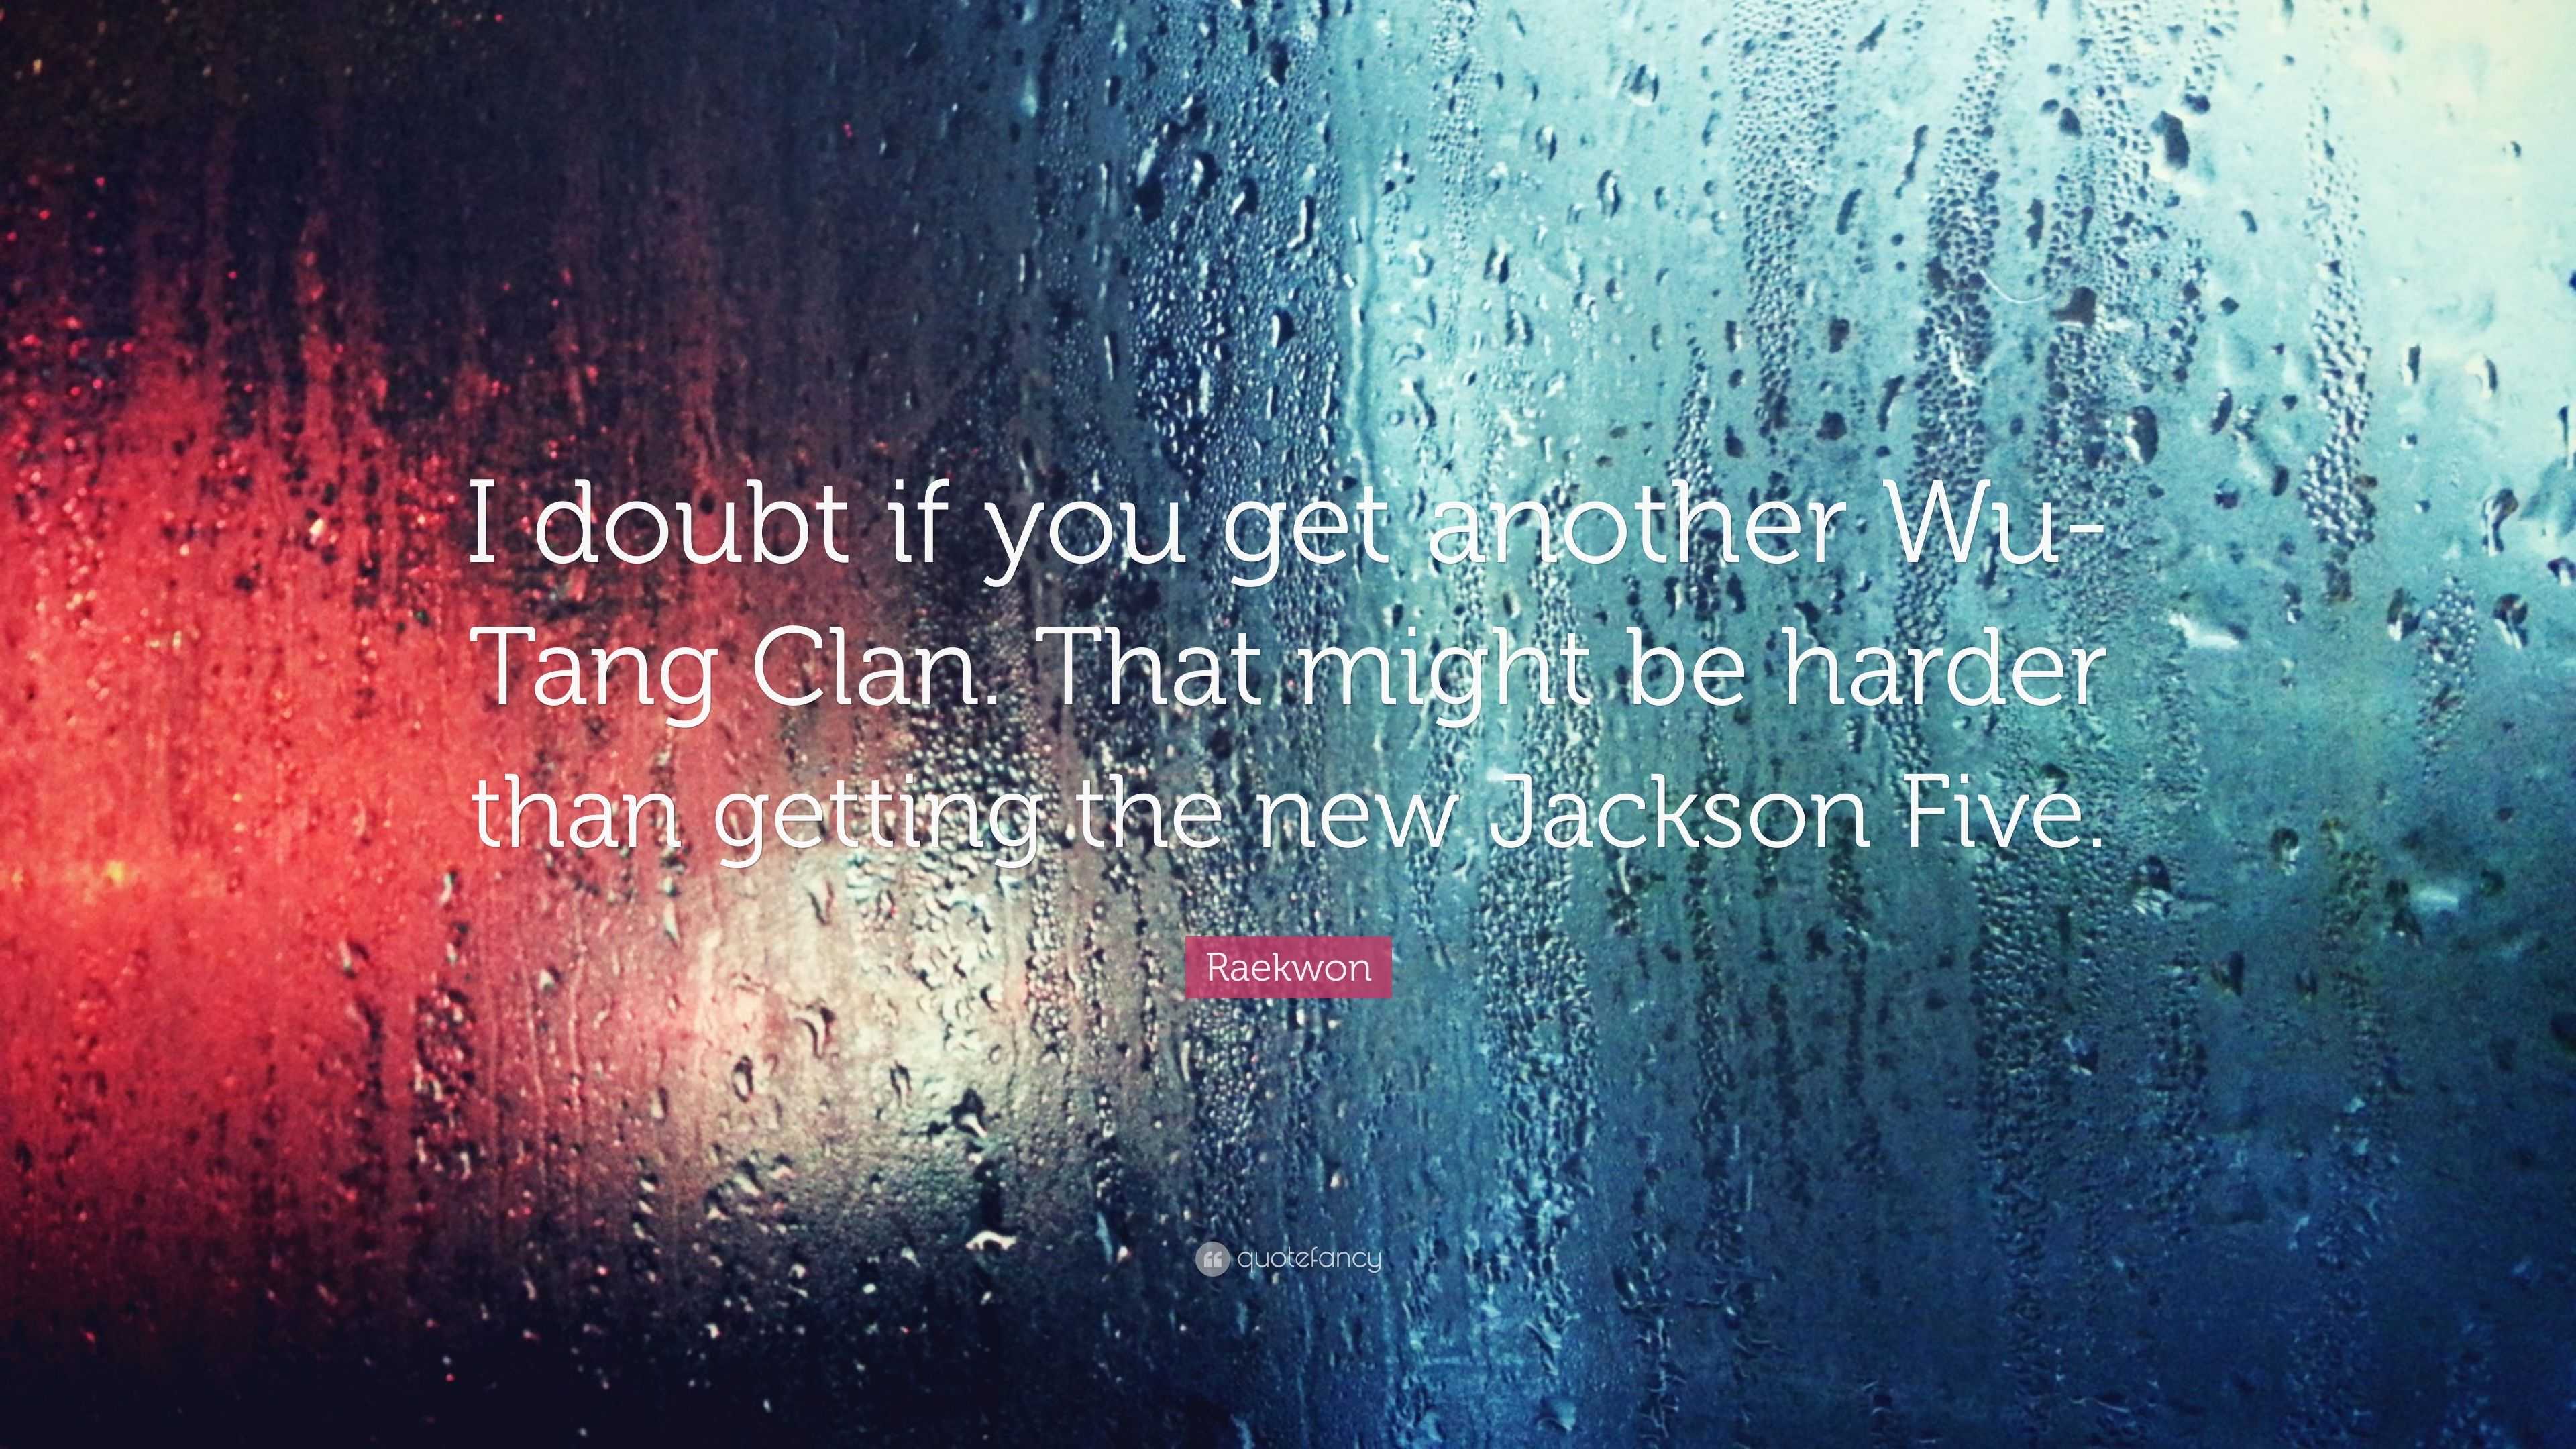 wu tang clan quotes